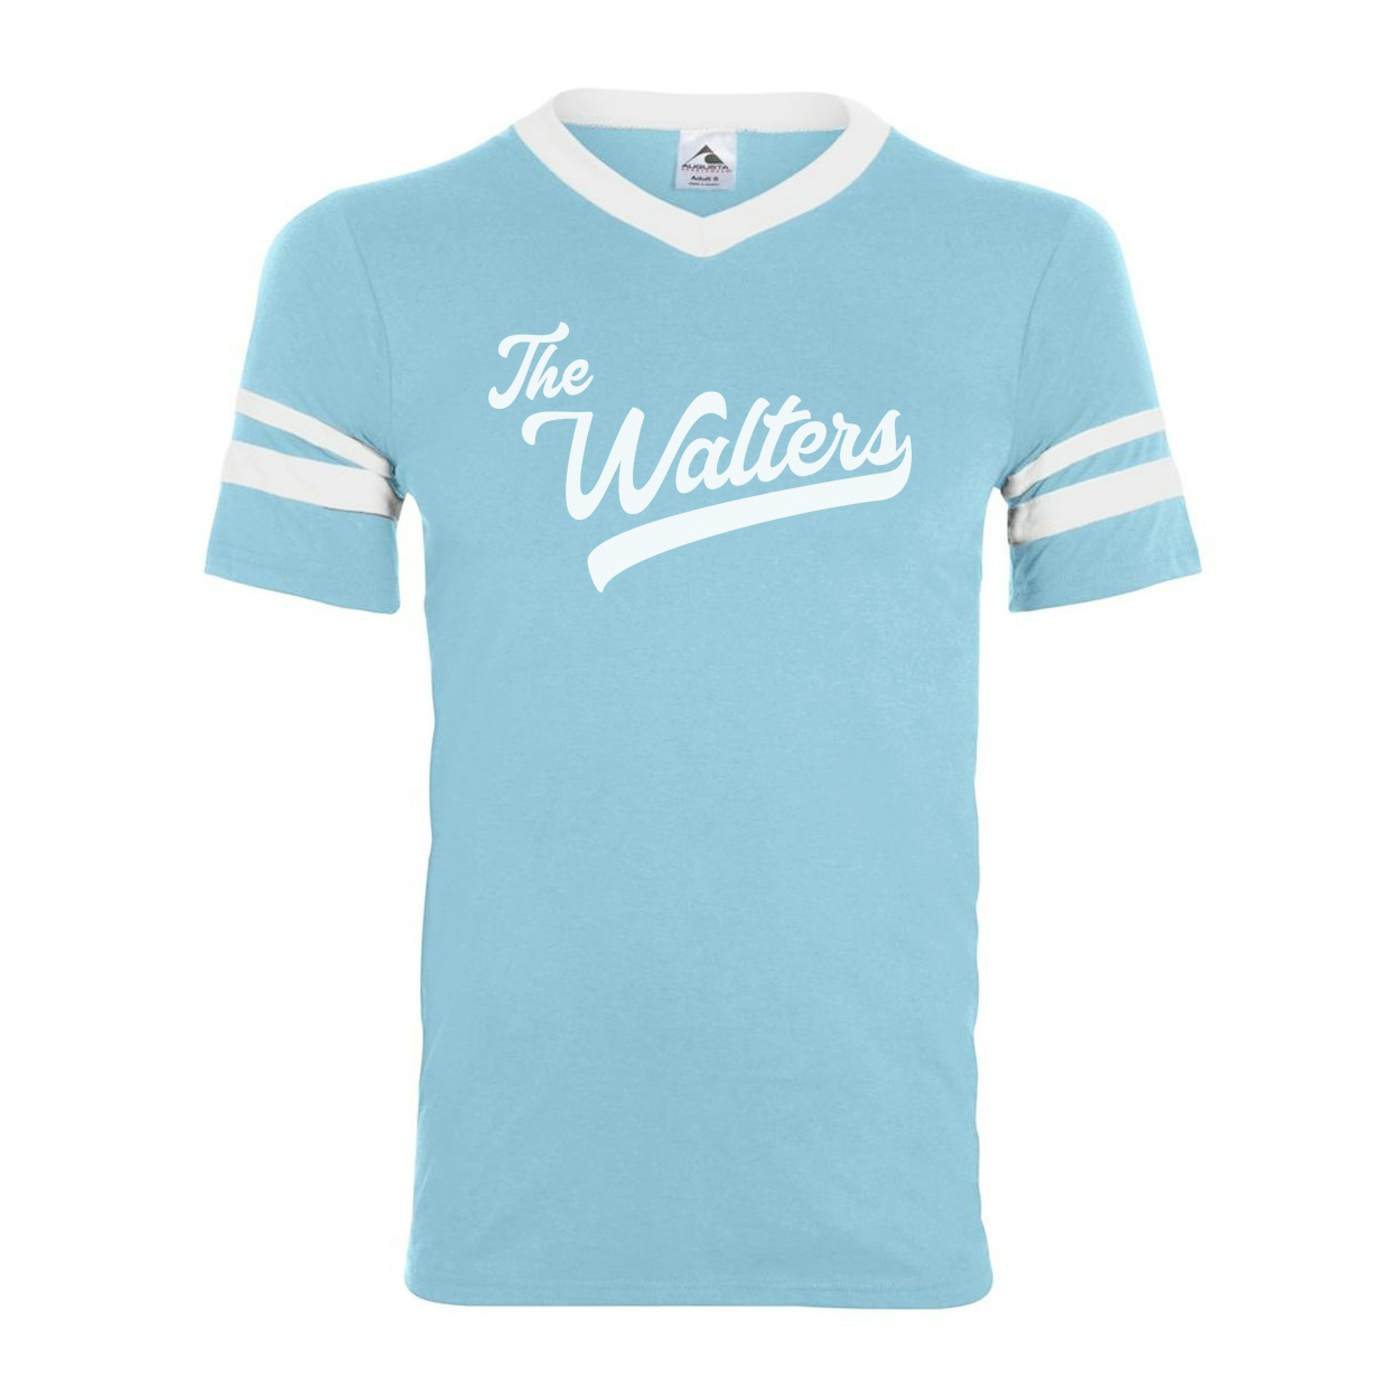 "The Walters" Blue Baseball Tee